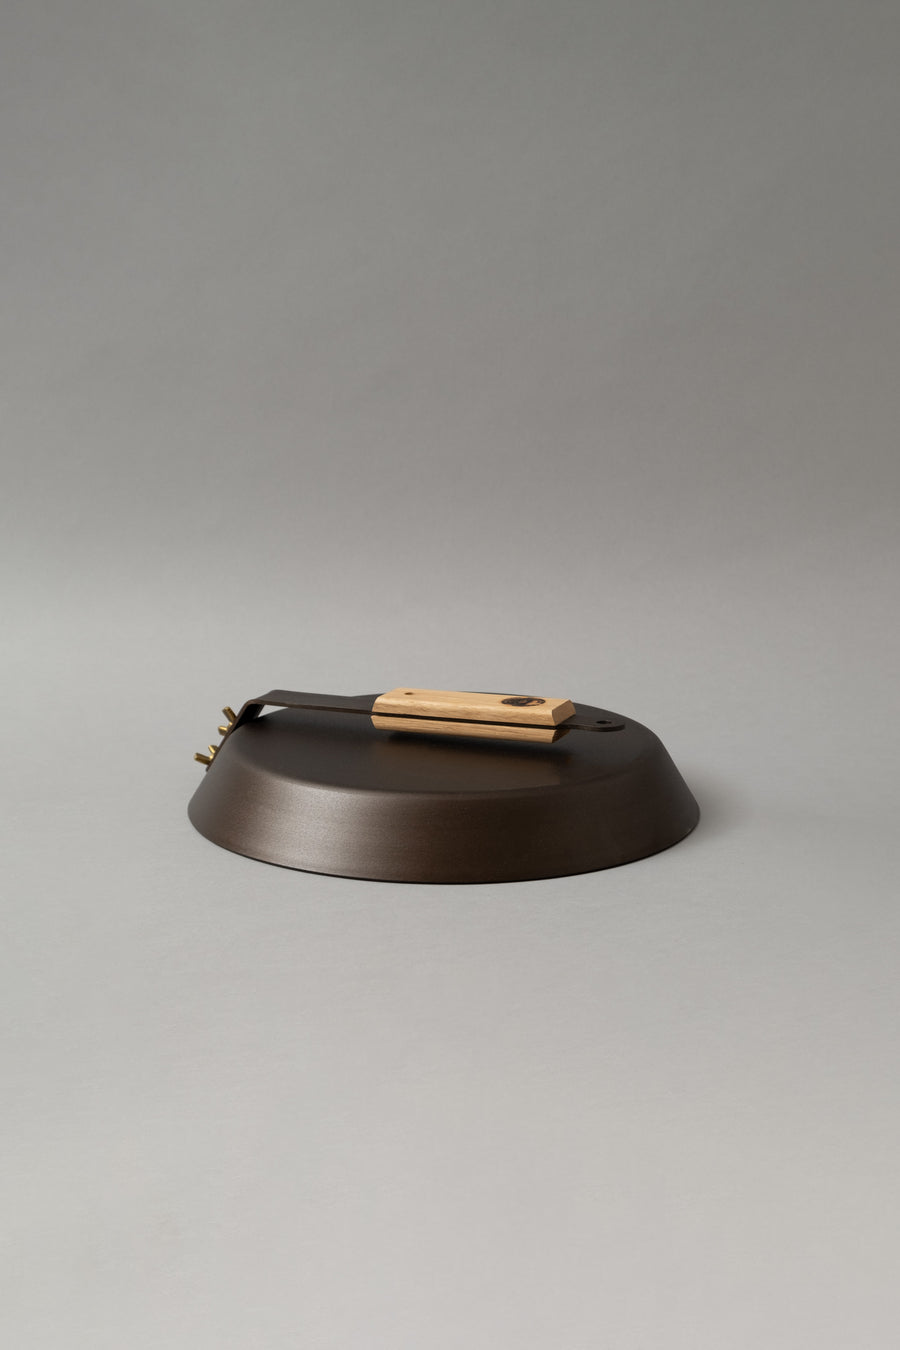 POELE NOMADE - POIGNÉE AMOVIBLE - GLAMPING PAN - ⌀ 26 cm - NETHERTON FOUNDRY